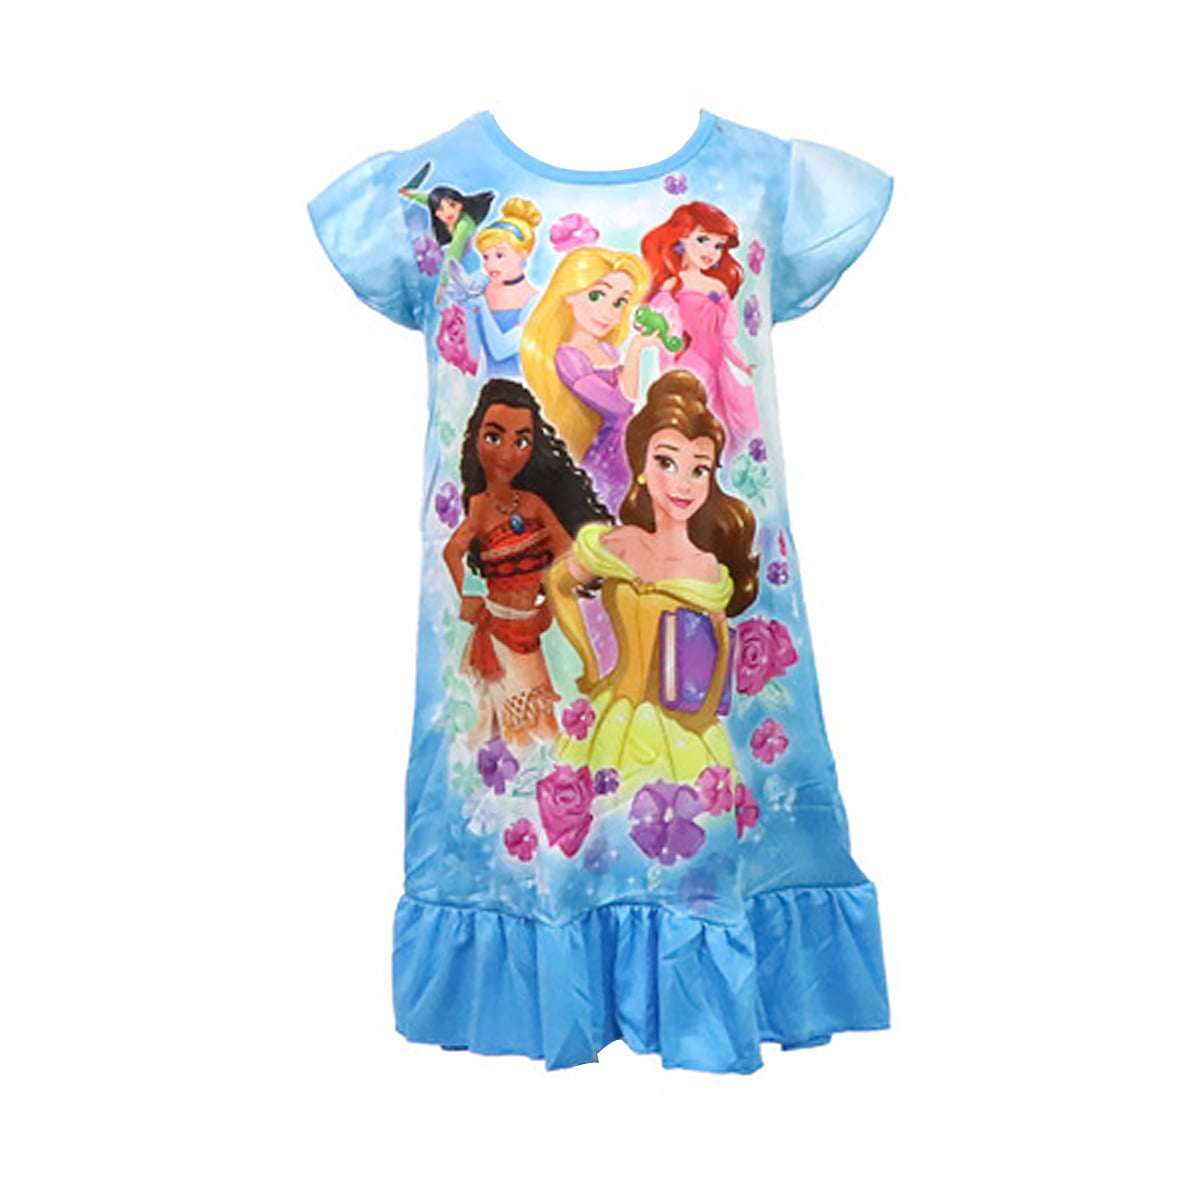 Frozen Princess Dress Girls Nightie Nightdress Pajamas Skirt Dress Party Summer